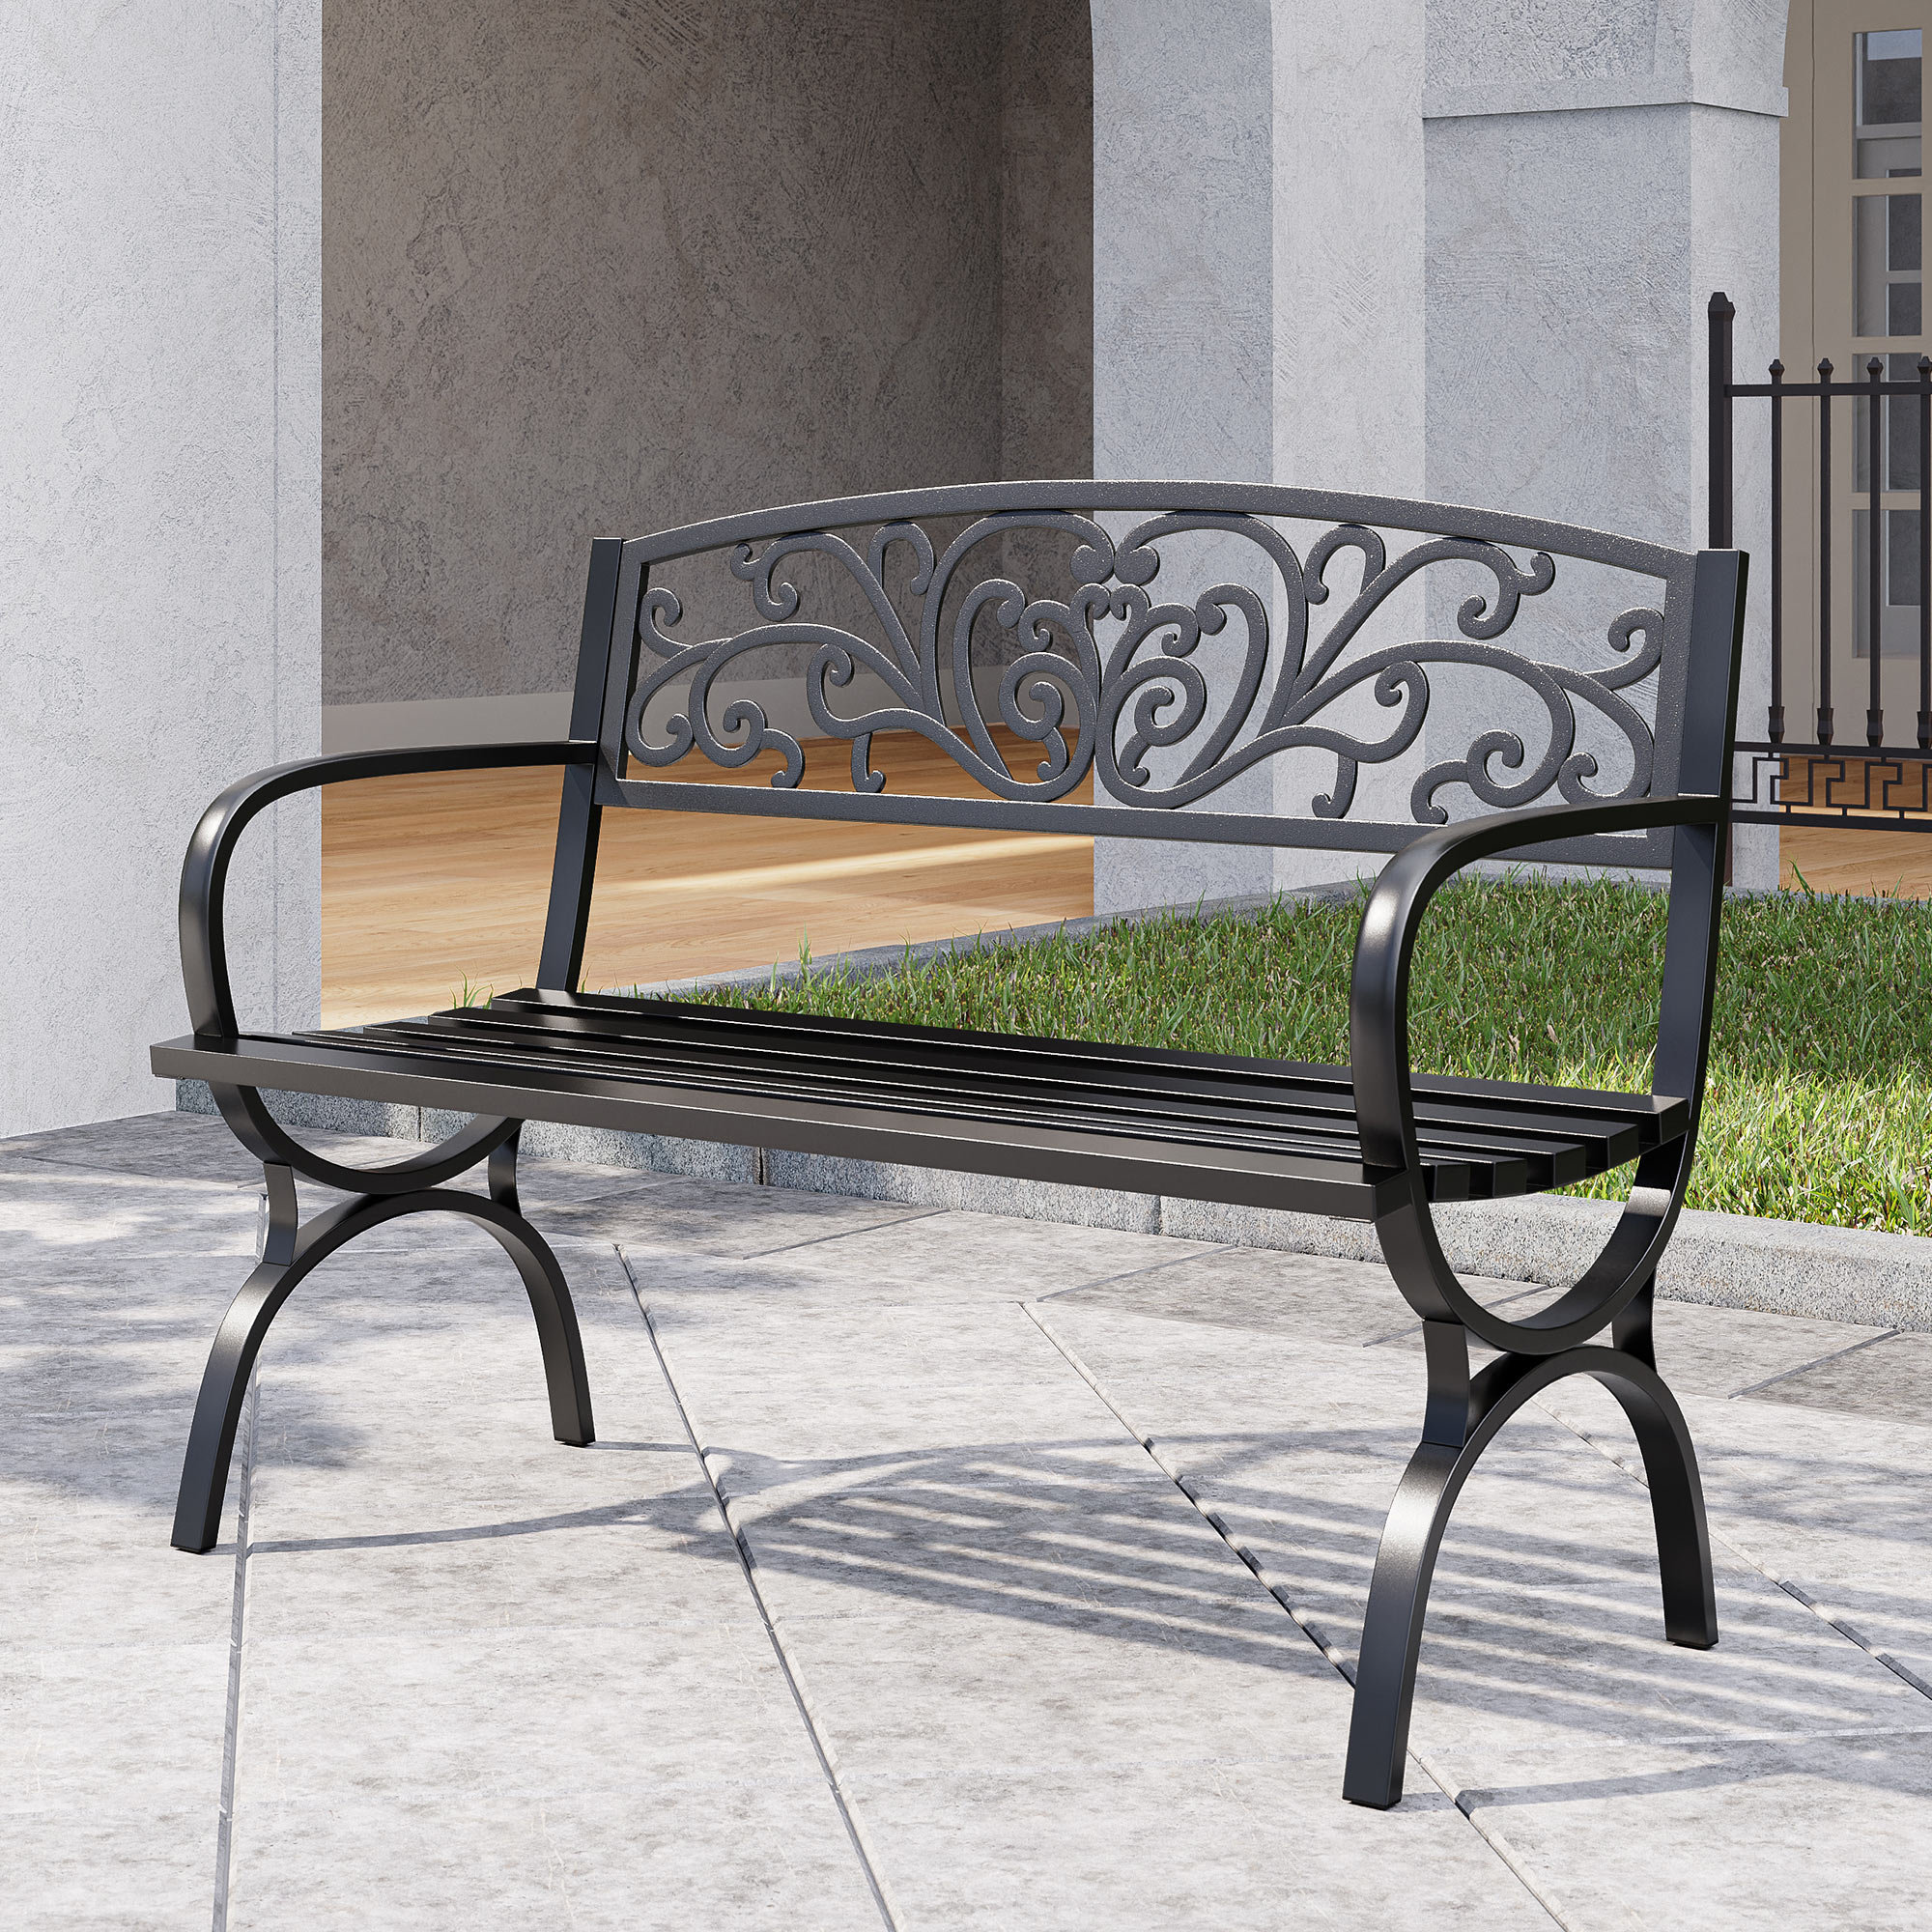 Garden Metal Bench 2 Seater Cast Iron Backrest Outdoor Furniture Home 